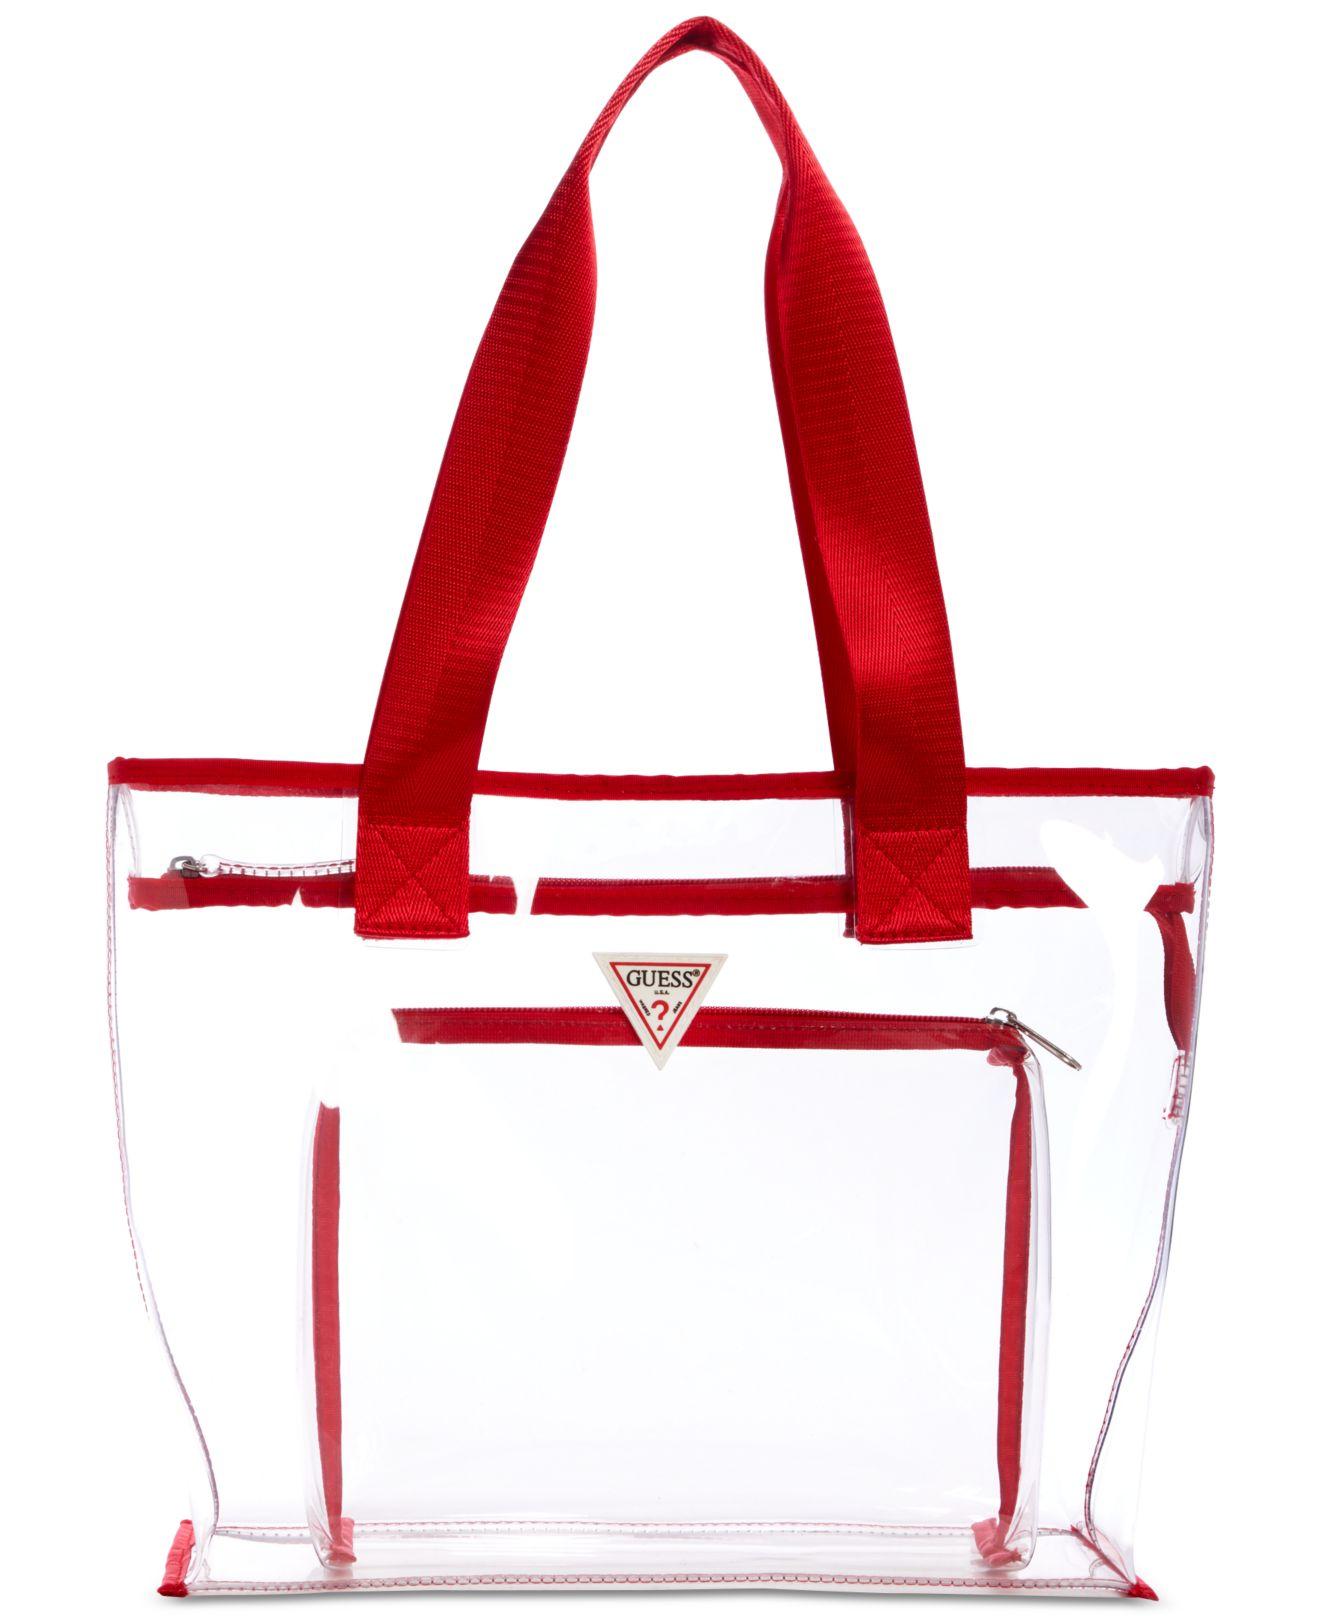 GUESS Tote Red Transparent Bag